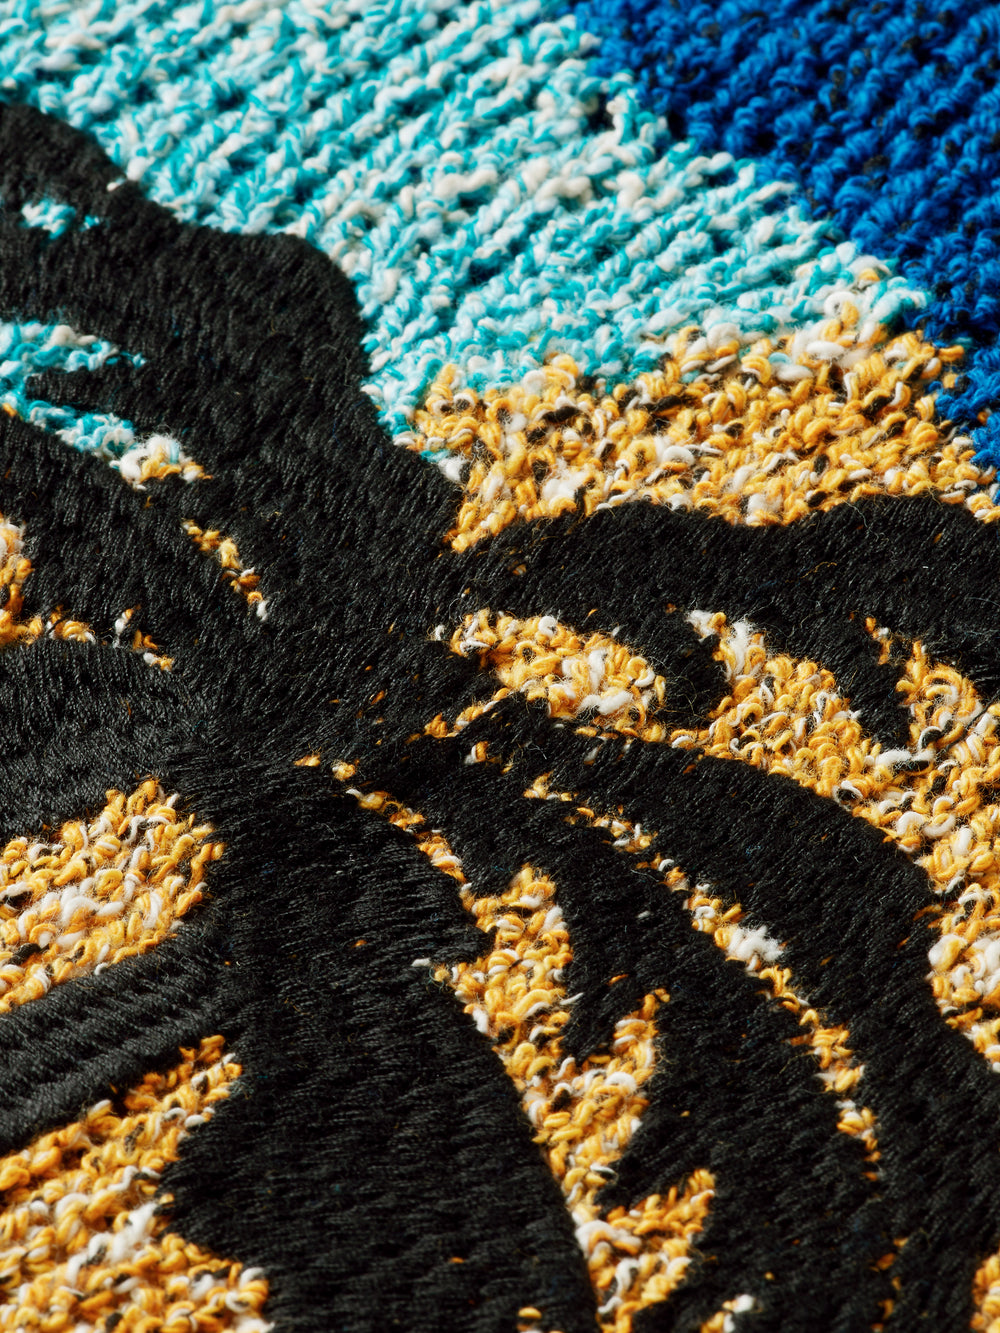 Melange pullover with palm artwork - Scotch & Soda AU